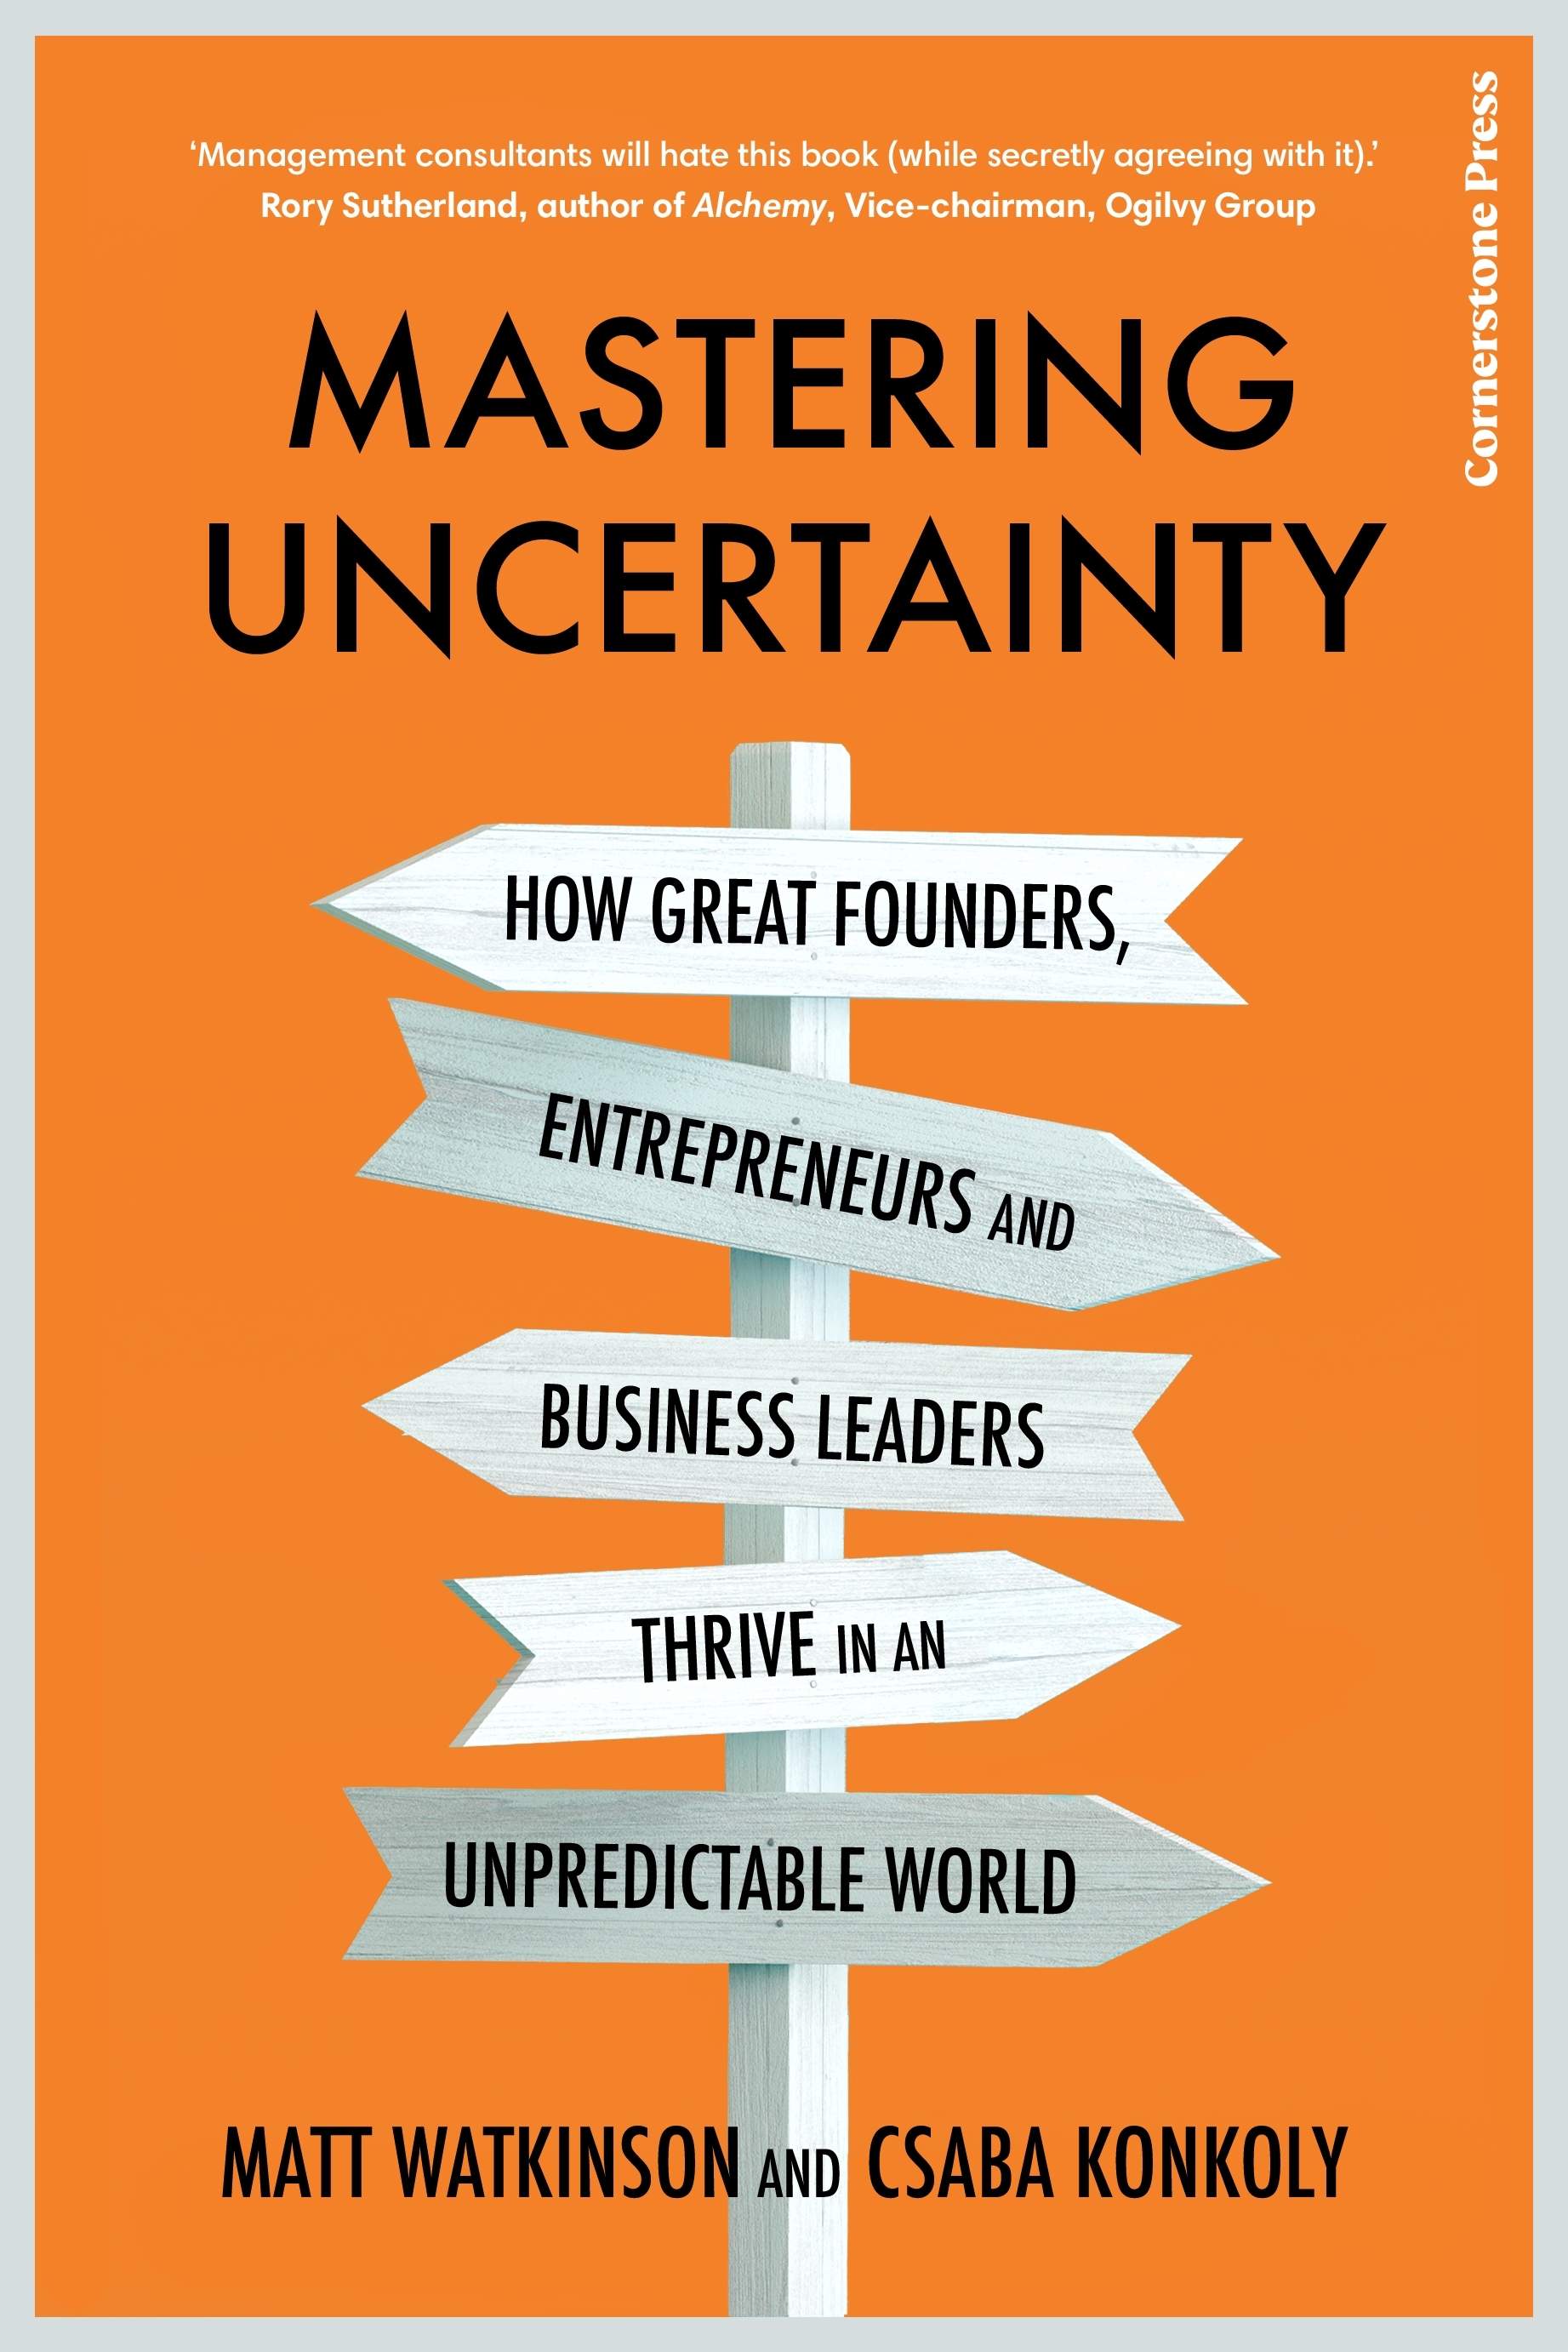 Mastering Uncertainty by Matt Watkinson - Penguin Books New Zealand